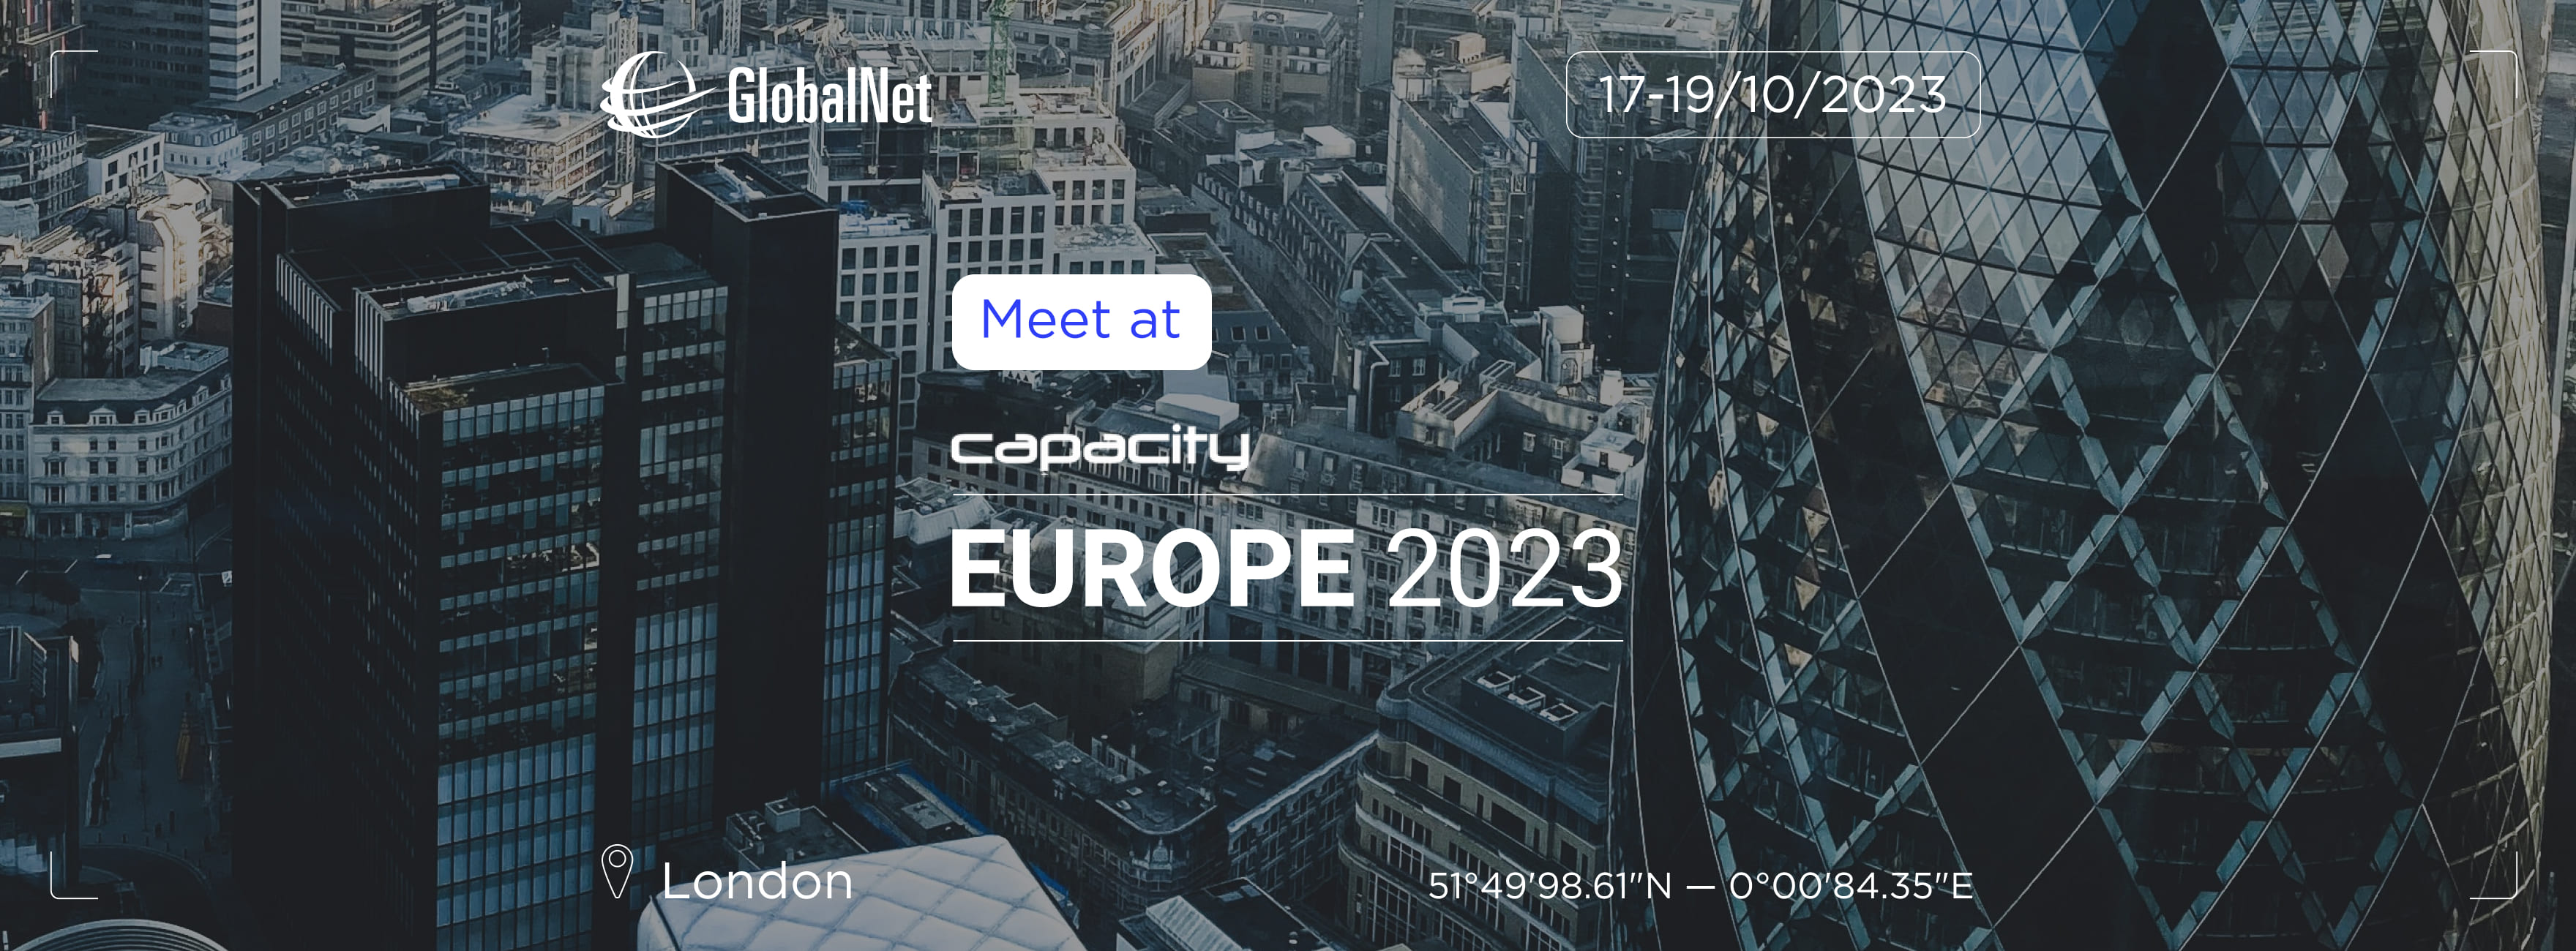 Meet at Capacity Europe 2023